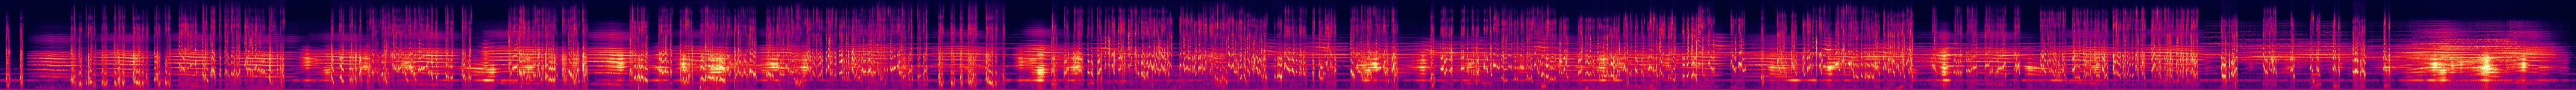 Amor Dei - 3. I'd like to believe in God but... - Spectrogram.jpg